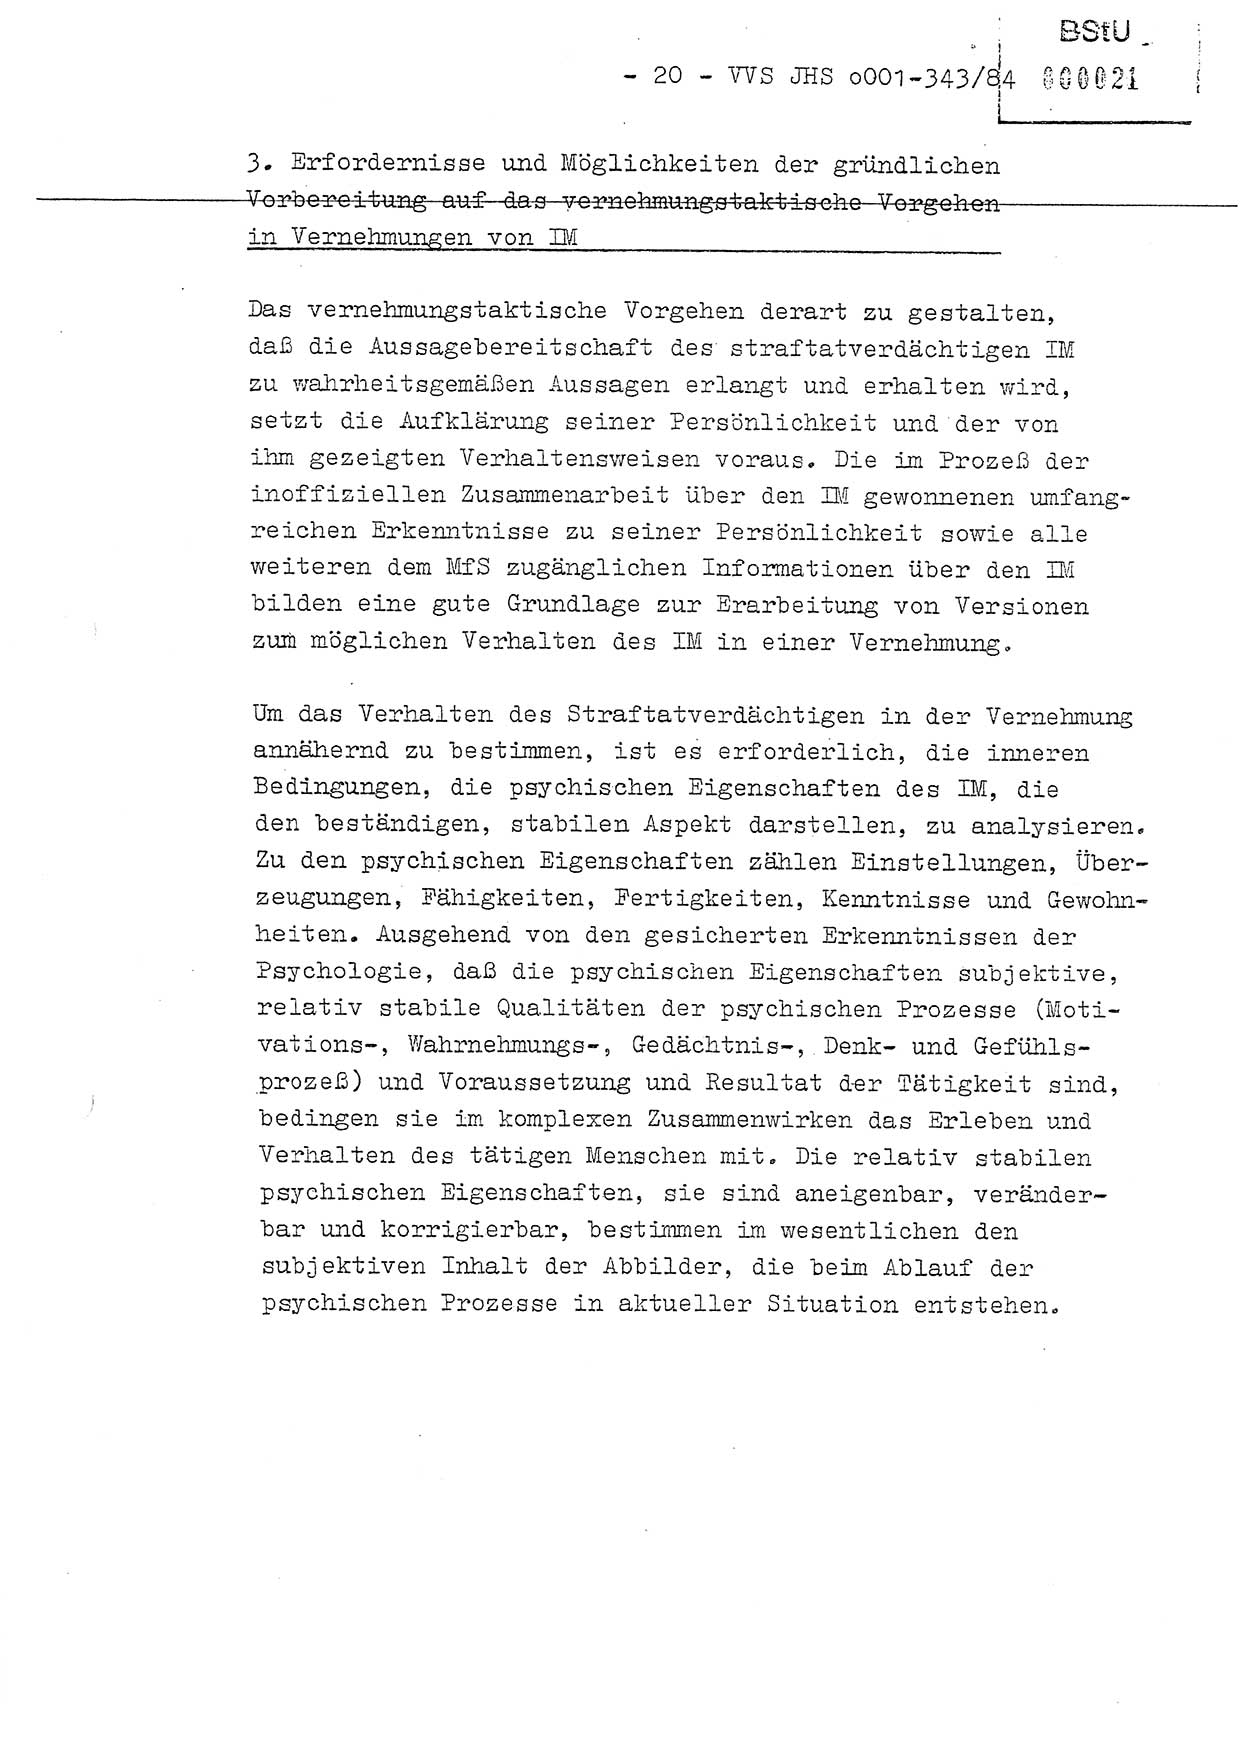 Diplomarbeit, Oberleutnant Bernd Michael (HA Ⅸ/5), Oberleutnant Peter Felber (HA IX/5), Ministerium für Staatssicherheit (MfS) [Deutsche Demokratische Republik (DDR)], Juristische Hochschule (JHS), Vertrauliche Verschlußsache (VVS) o001-343/84, Potsdam 1985, Seite 20 (Dipl.-Arb. MfS DDR JHS VVS o001-343/84 1985, S. 20)